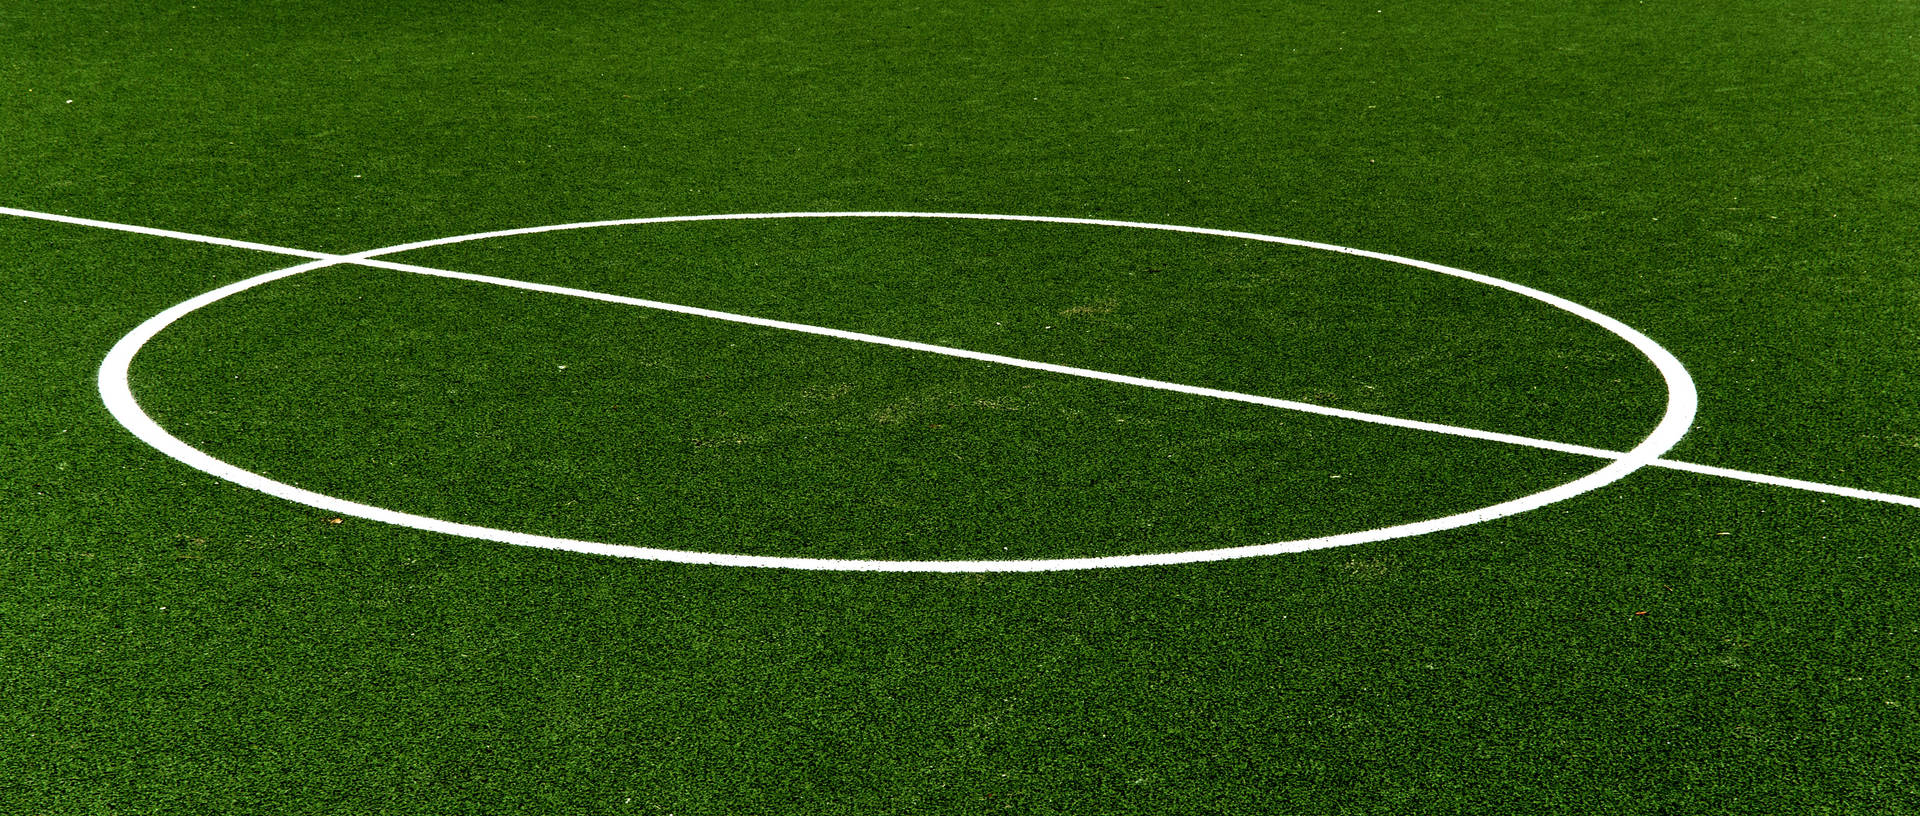 Football Field Centre Circle